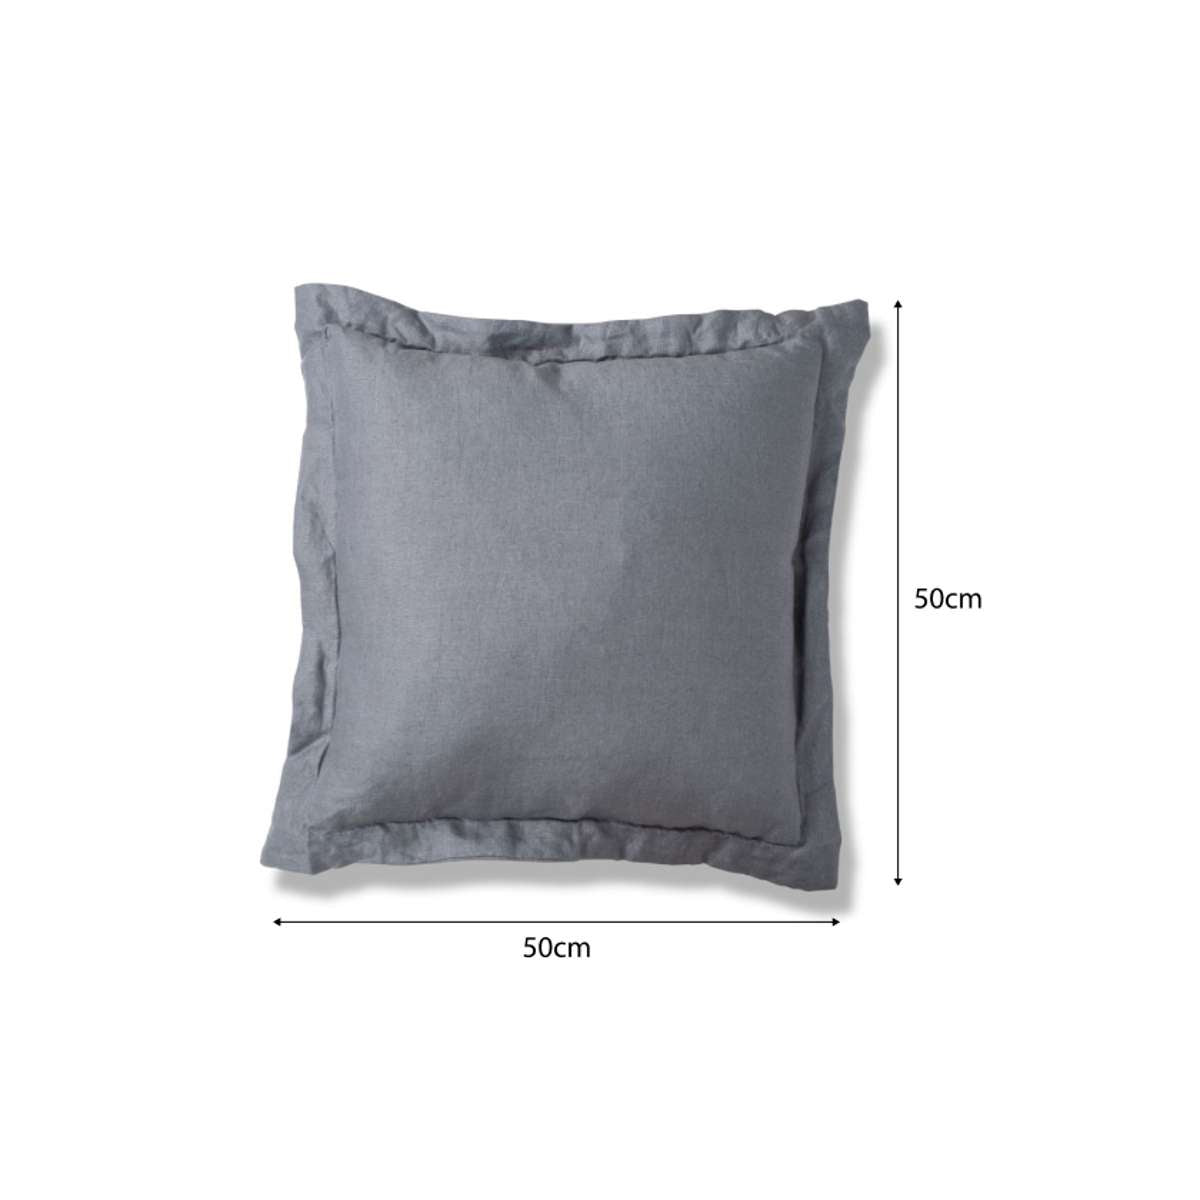 Mocka Linen Cushion - Petrol Blue